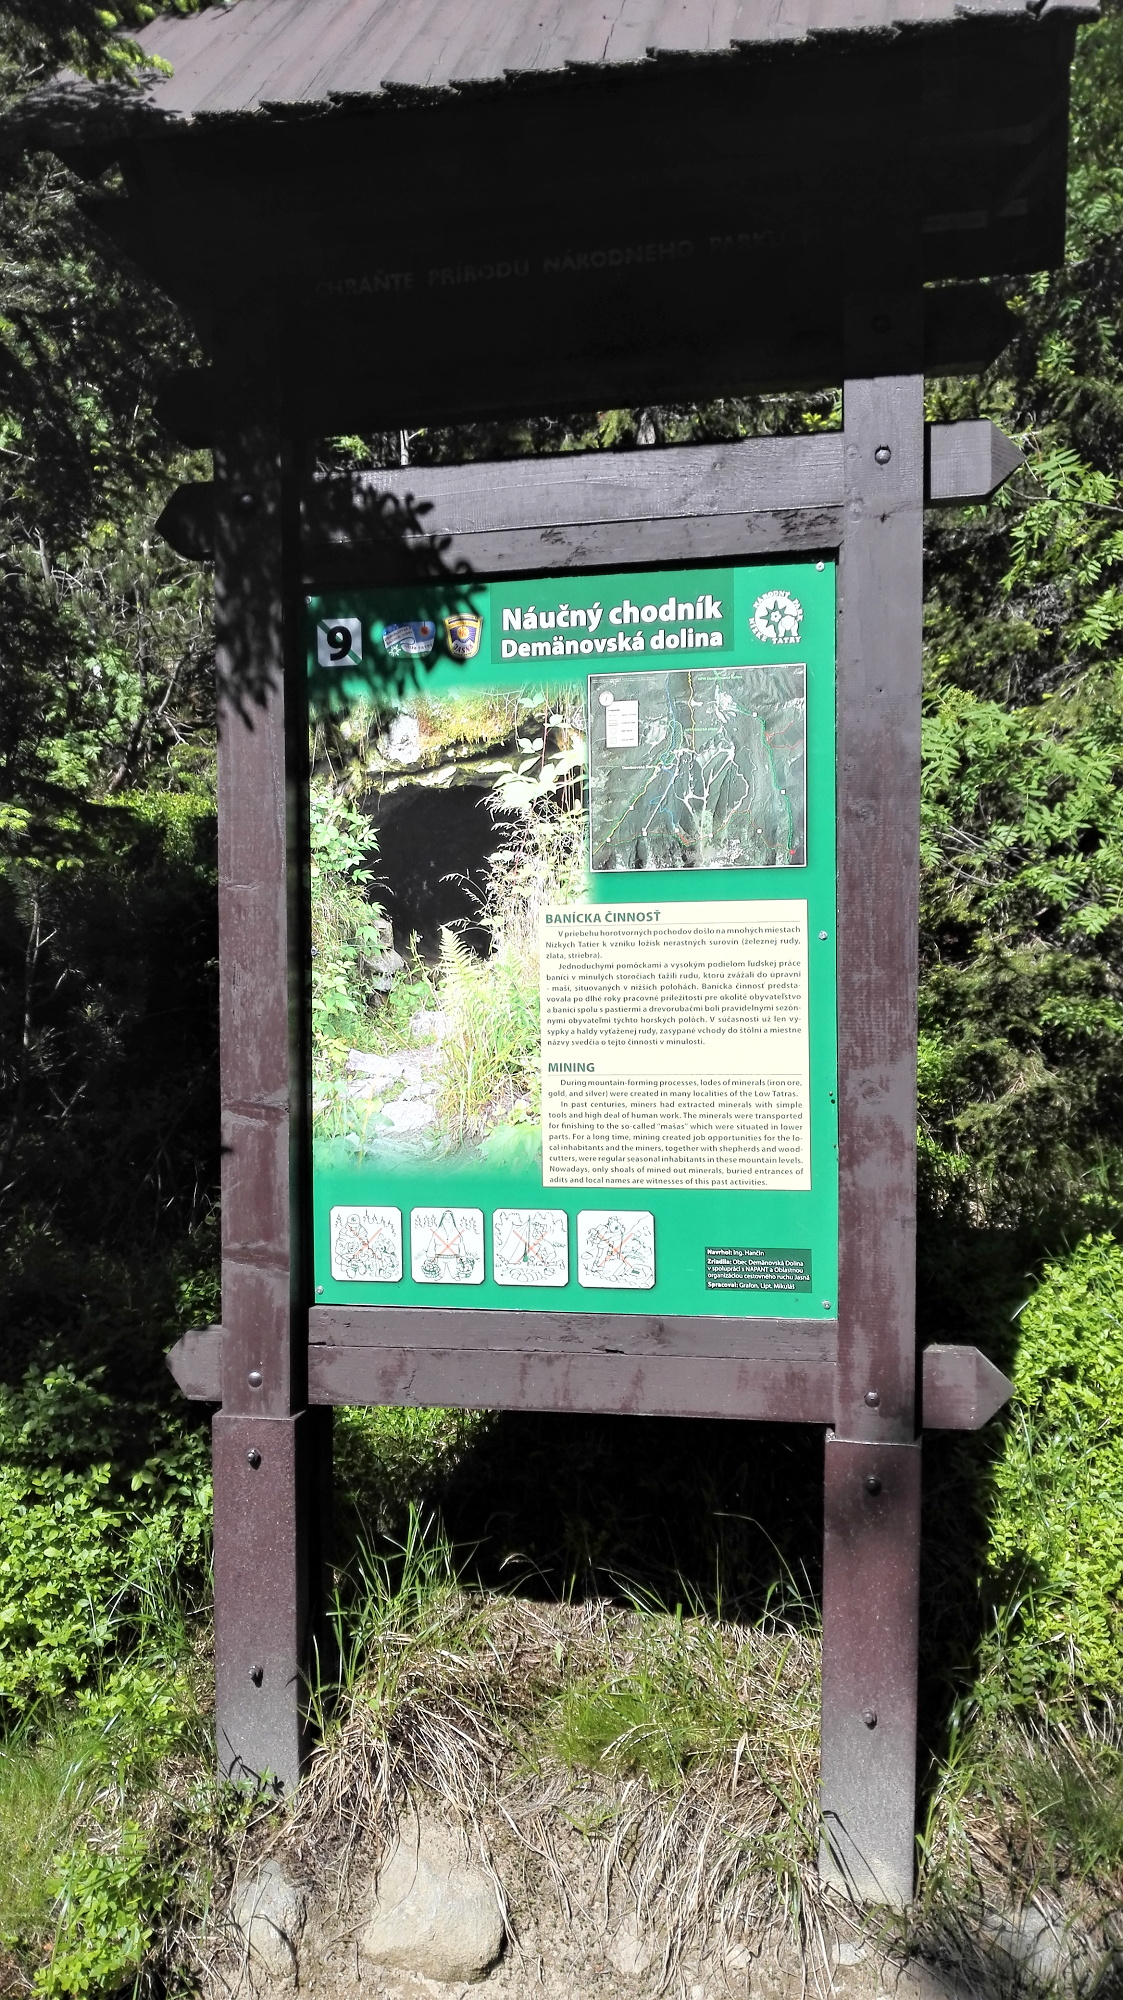 Nature Trail in Demänovská Valley